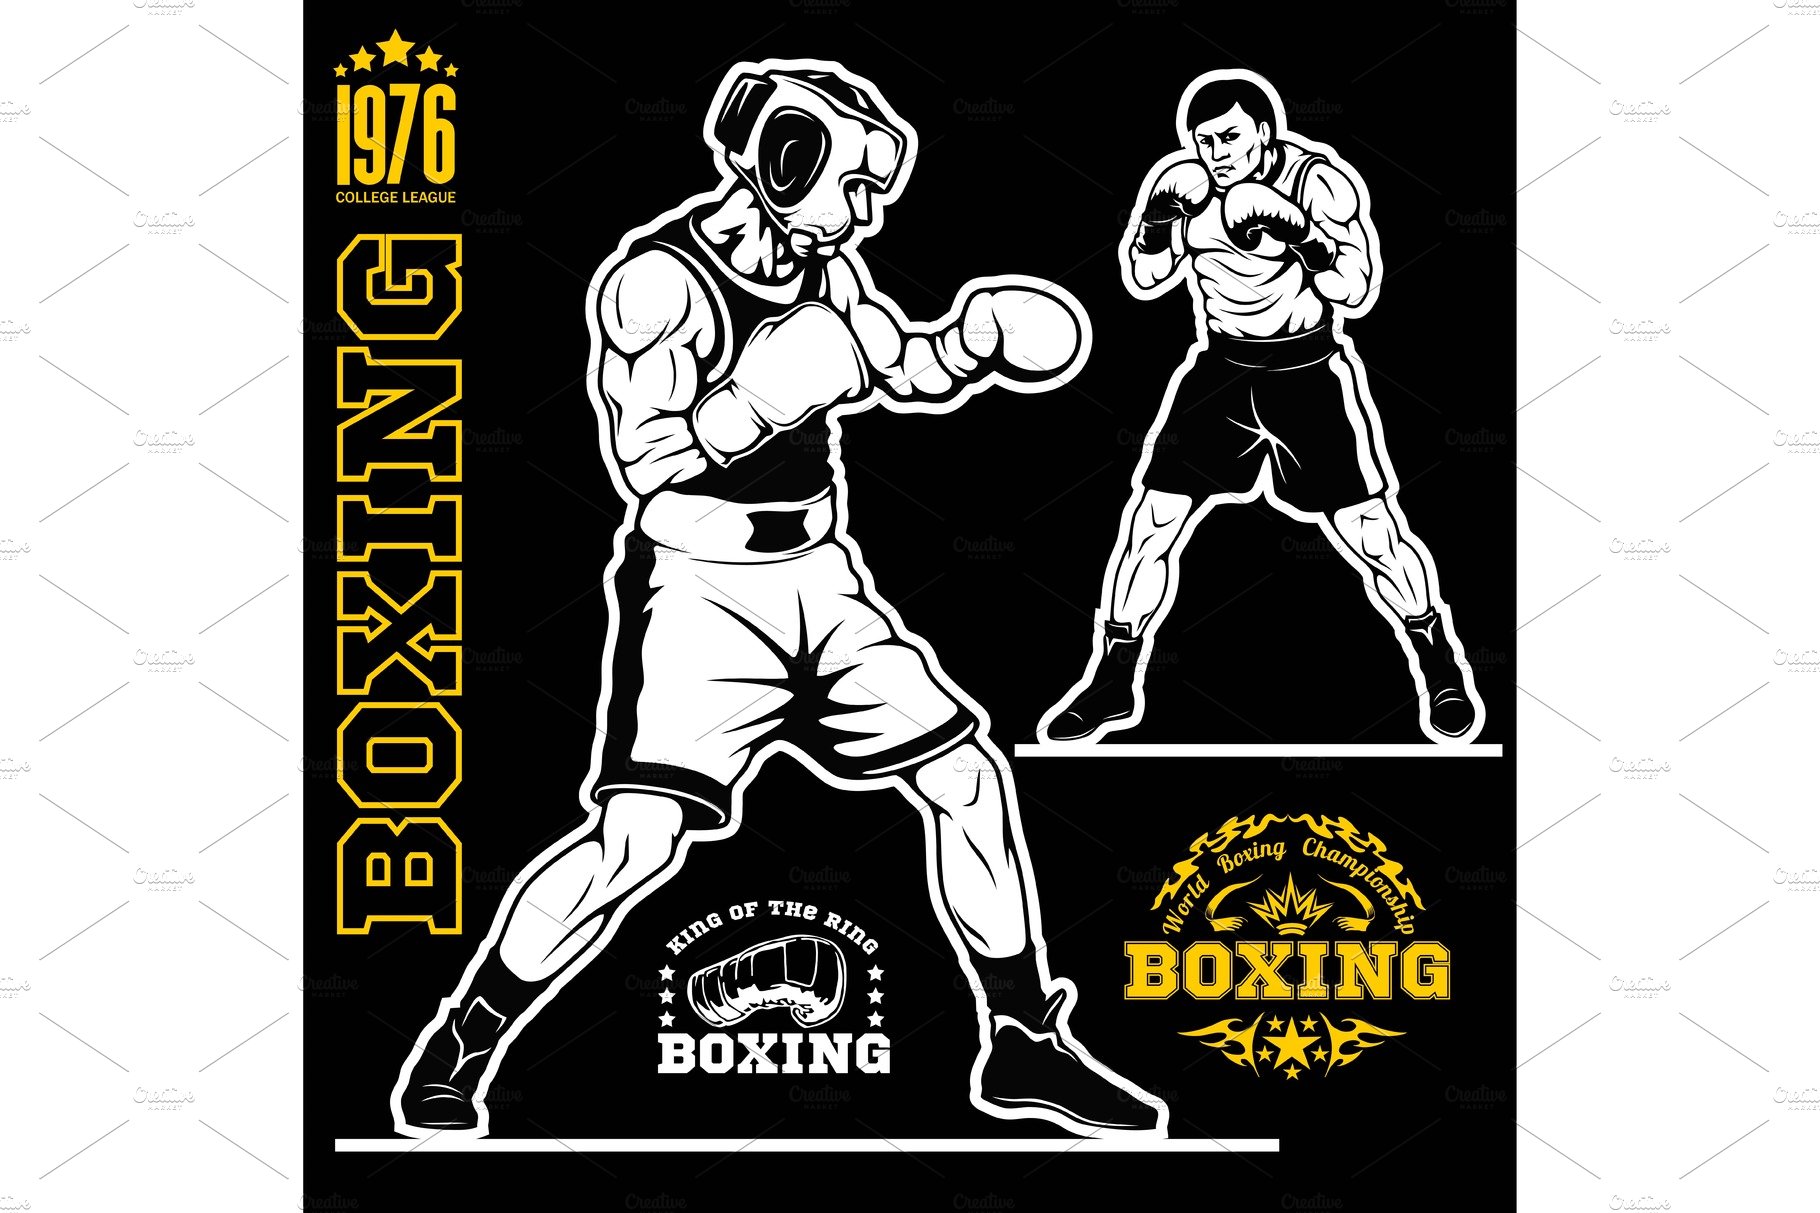 Boxing set - boxers, emblems, labels cover image.